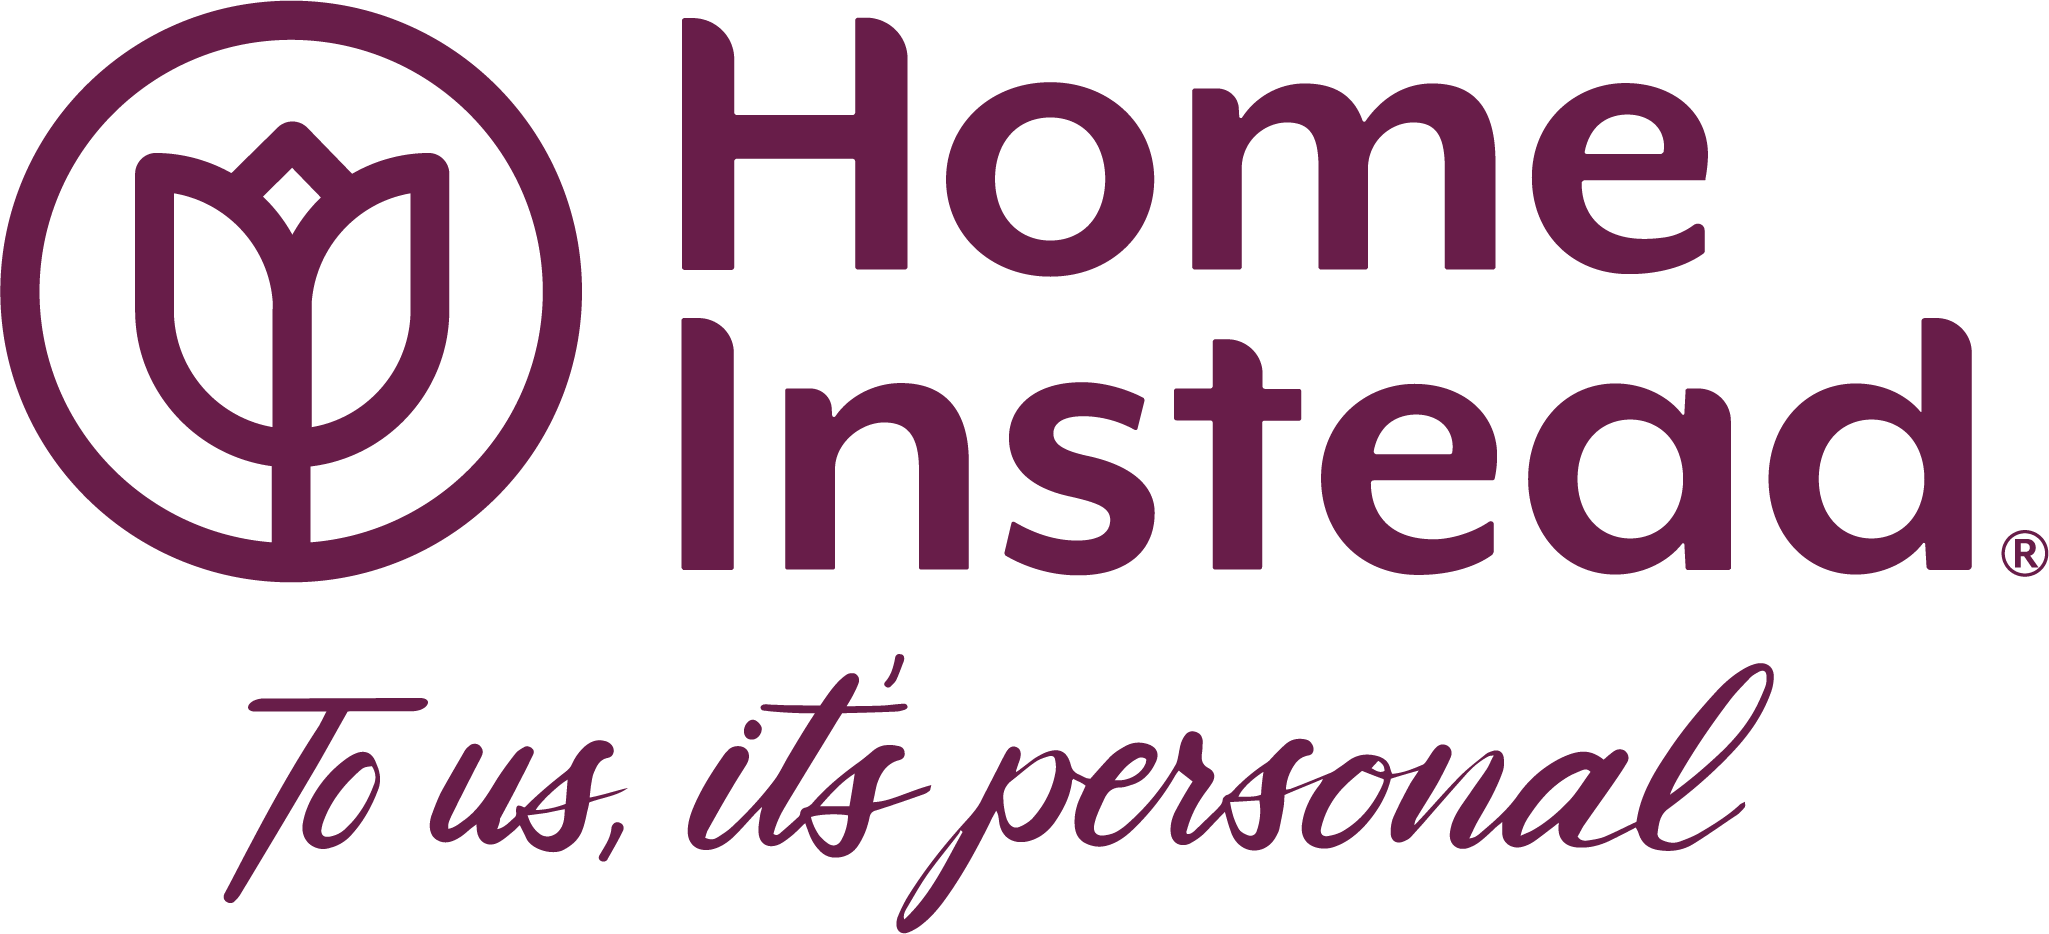 Home Instead Cleveland East Company Logo